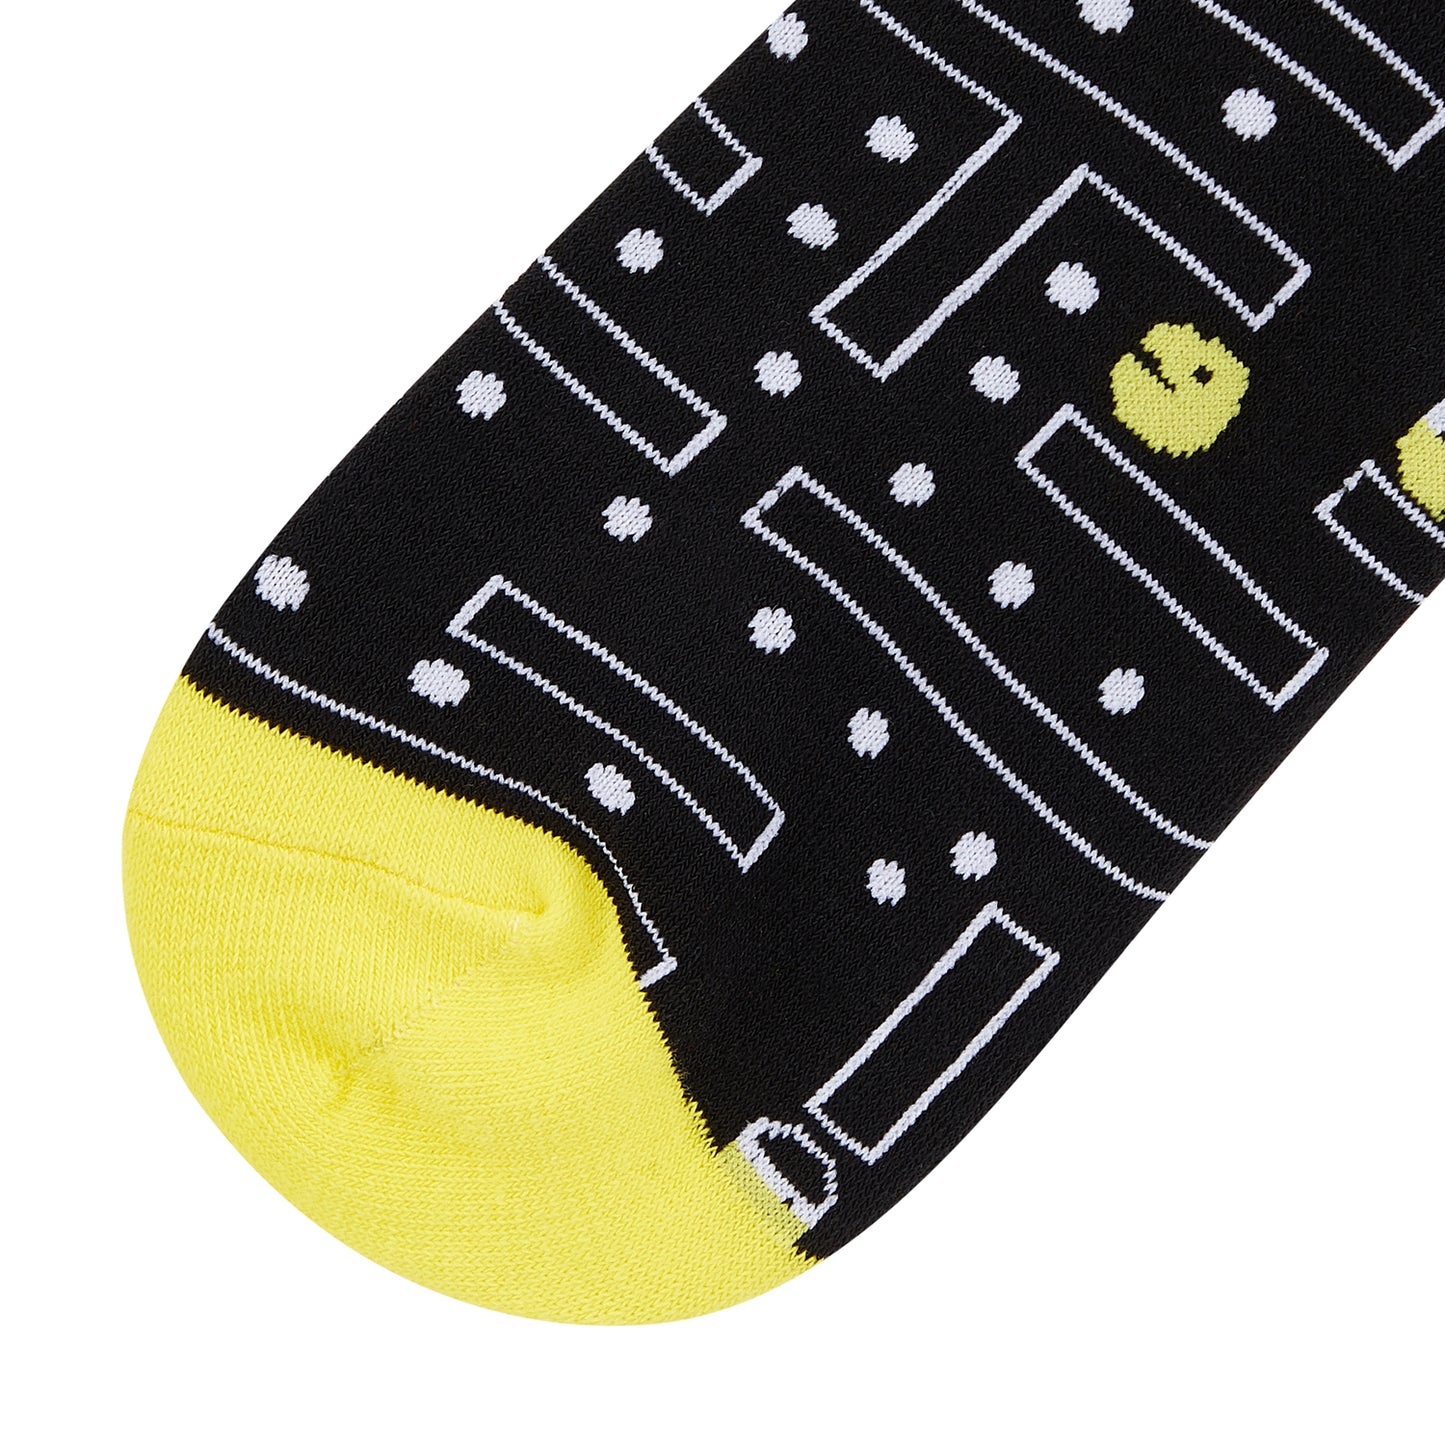 Pacman Printed Mid-Calf Length Socks - IDENTITY Apparel Shop